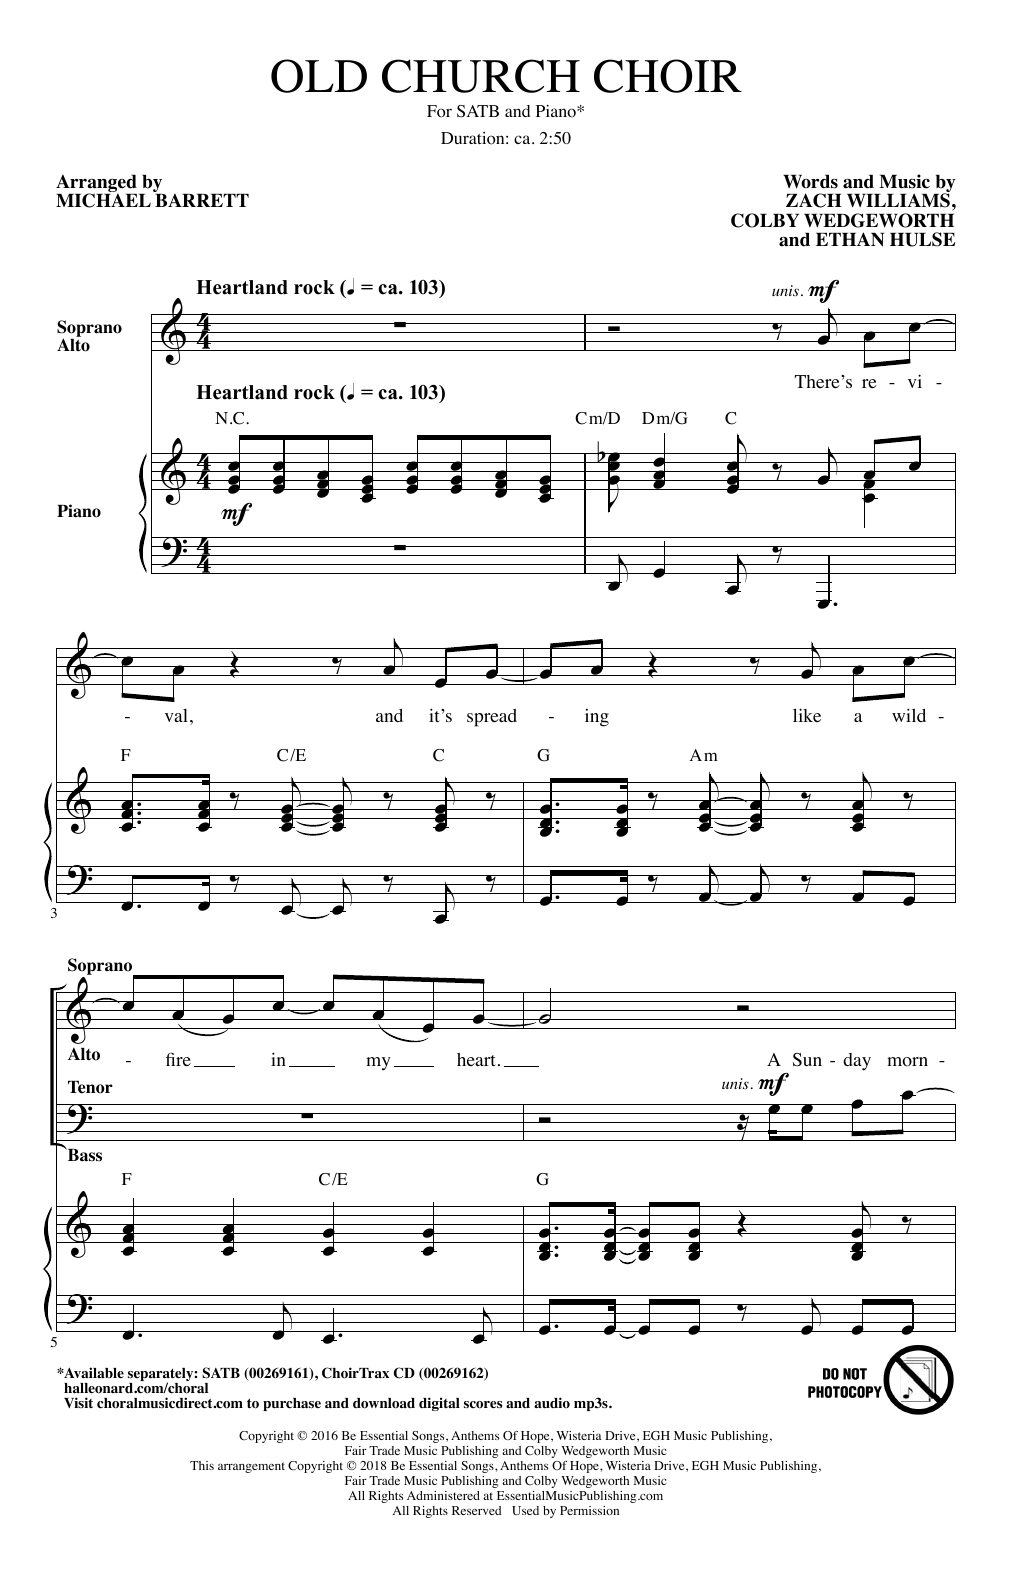 Zach Williams Old Church Choir (arr. Michael Barrett) Sheet Music Notes & Chords for SATB - Download or Print PDF